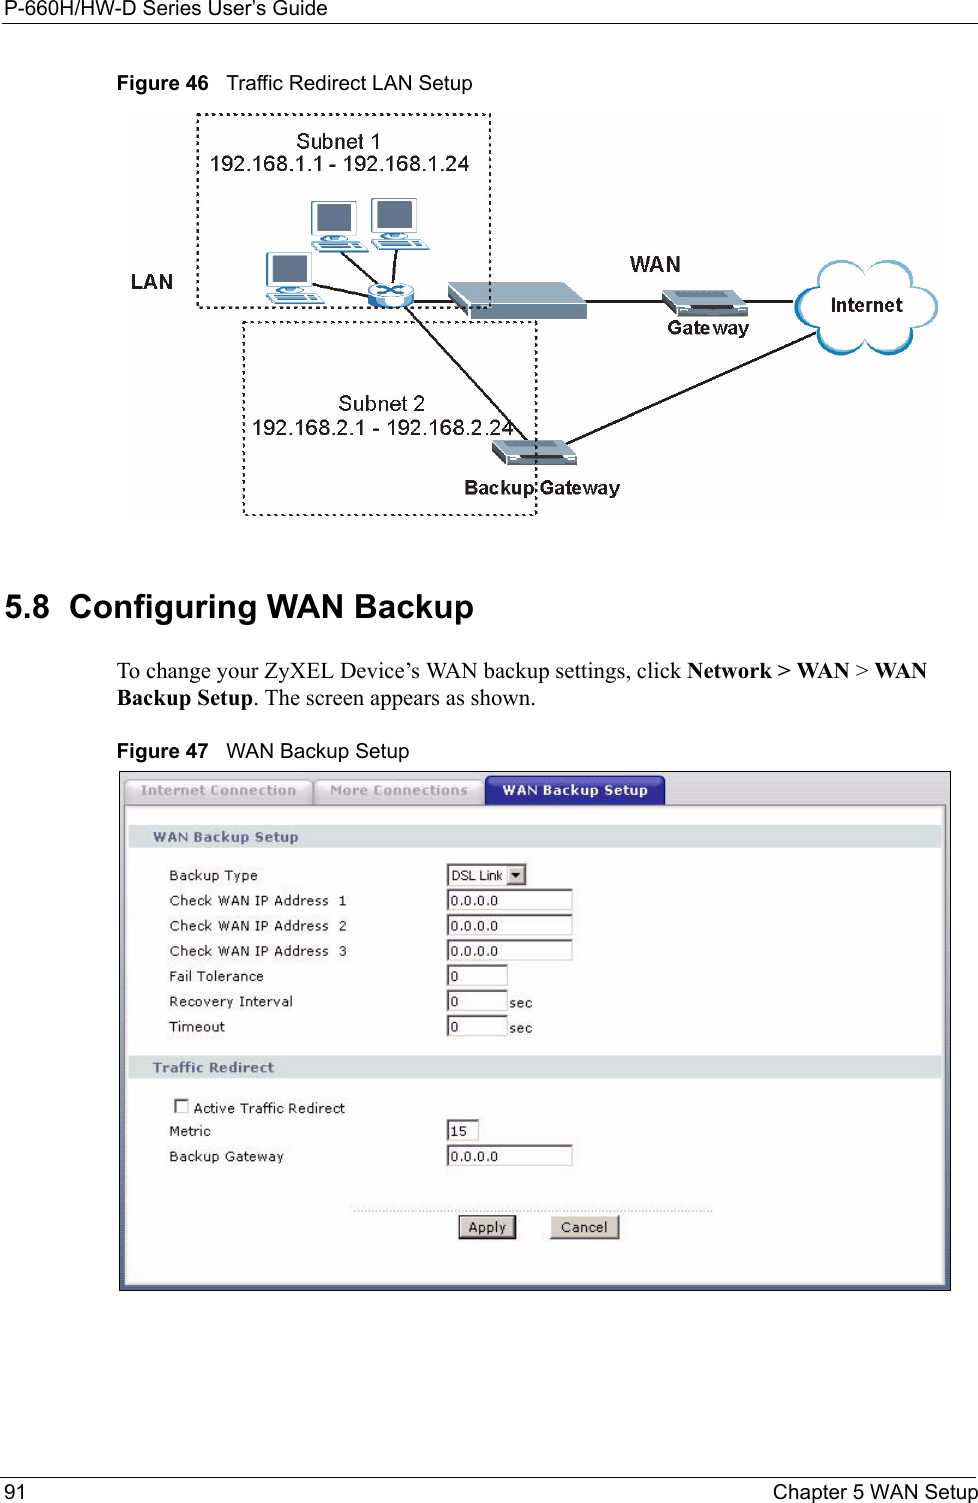 P-660H/HW-D Series User’s Guide91 Chapter 5 WAN SetupFigure 46   Traffic Redirect LAN Setup5.8  Configuring WAN Backup To change your ZyXEL Device’s WAN backup settings, click Network &gt; WAN &gt; WAN Backup Setup. The screen appears as shown.Figure 47   WAN Backup Setup